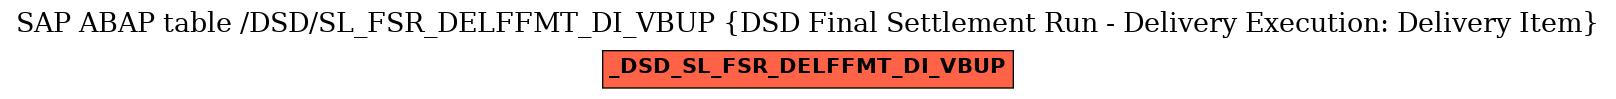 E-R Diagram for table /DSD/SL_FSR_DELFFMT_DI_VBUP (DSD Final Settlement Run - Delivery Execution: Delivery Item)